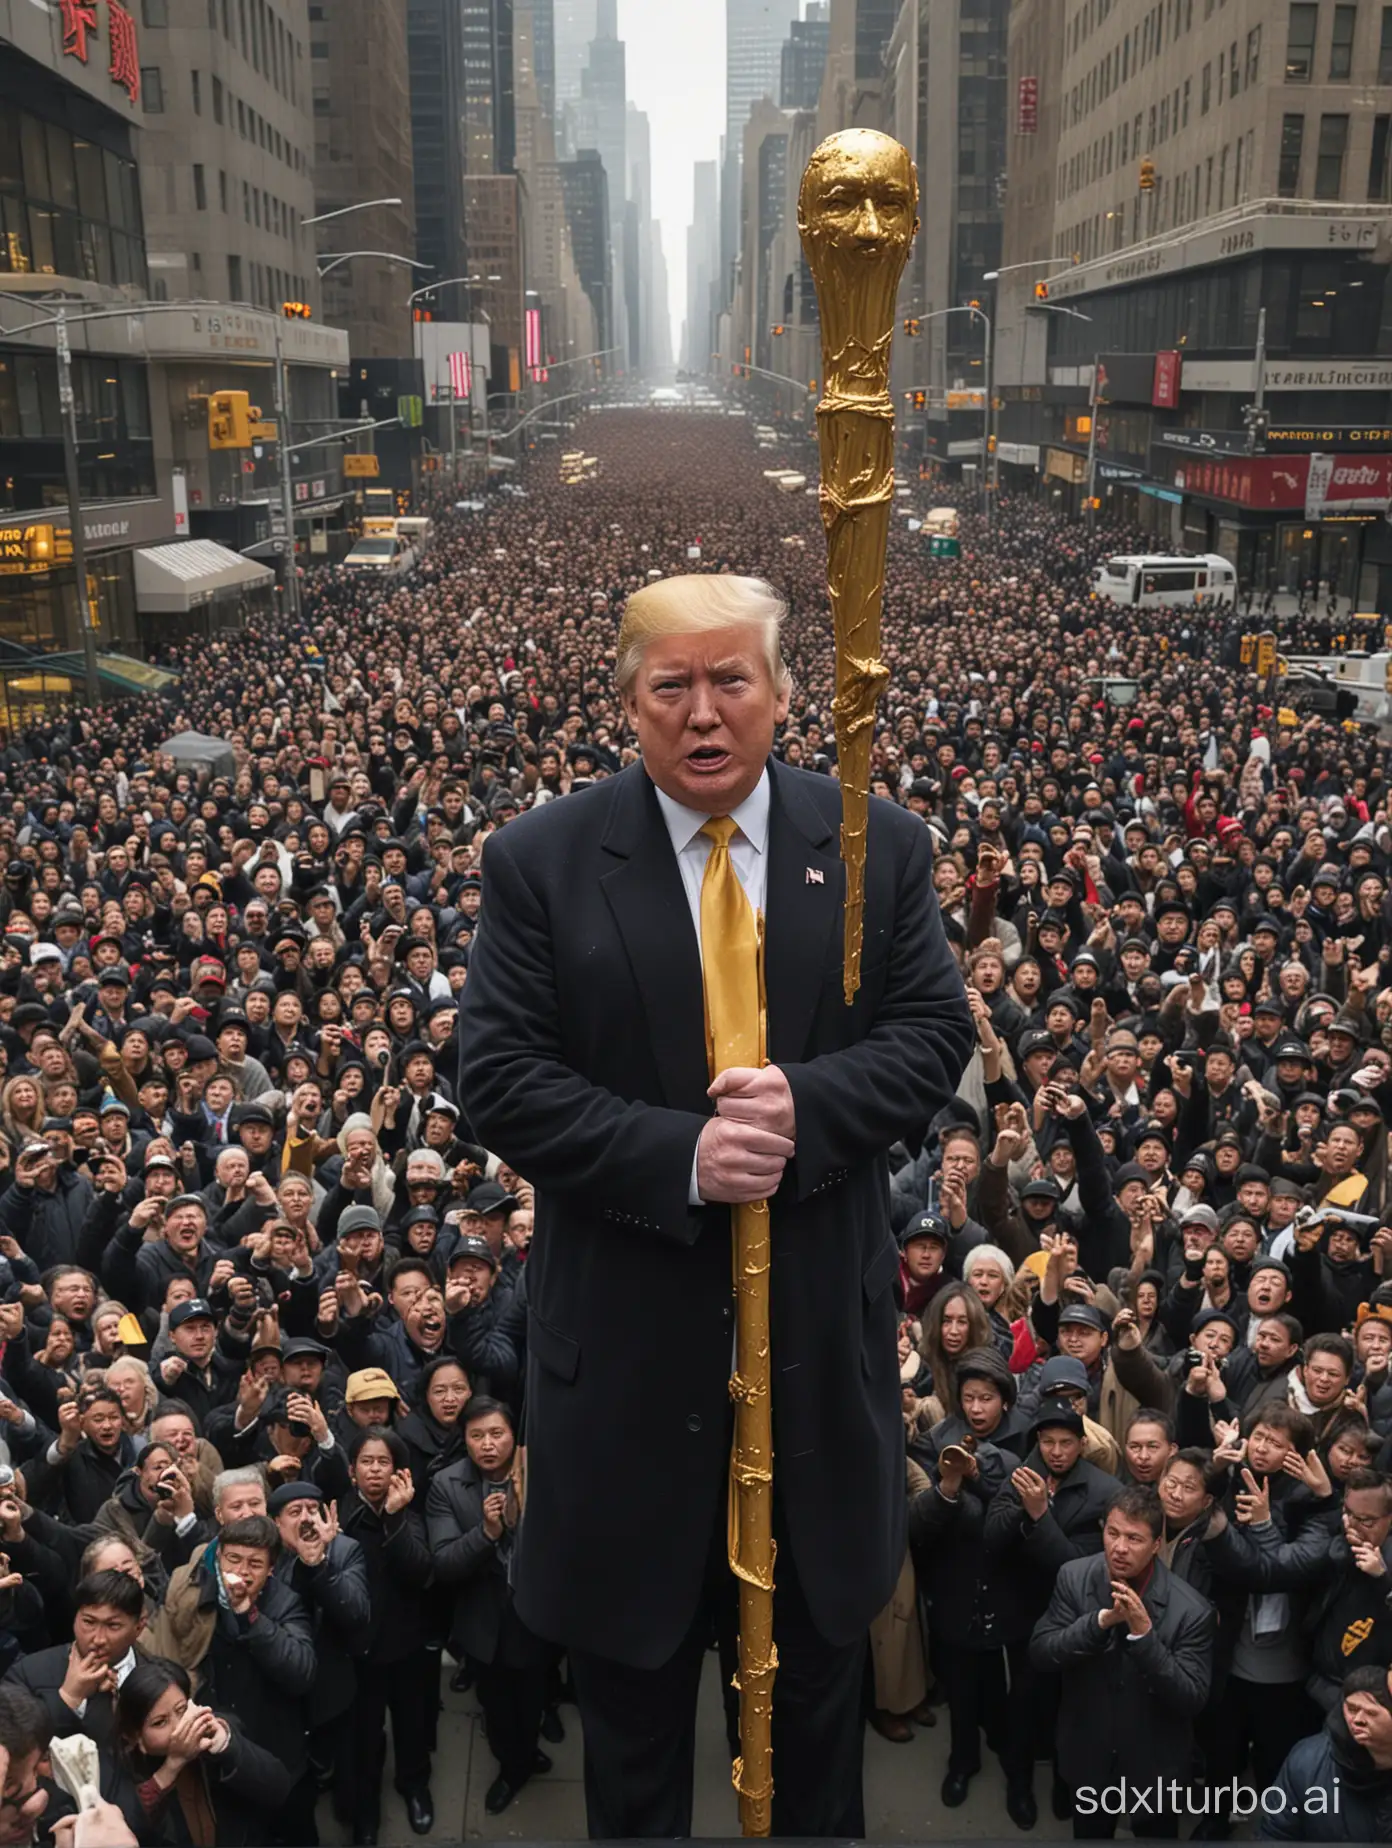 Colossal-Trump-wielding-Golden-Cudgel-surveys-New-York-in-turmoil